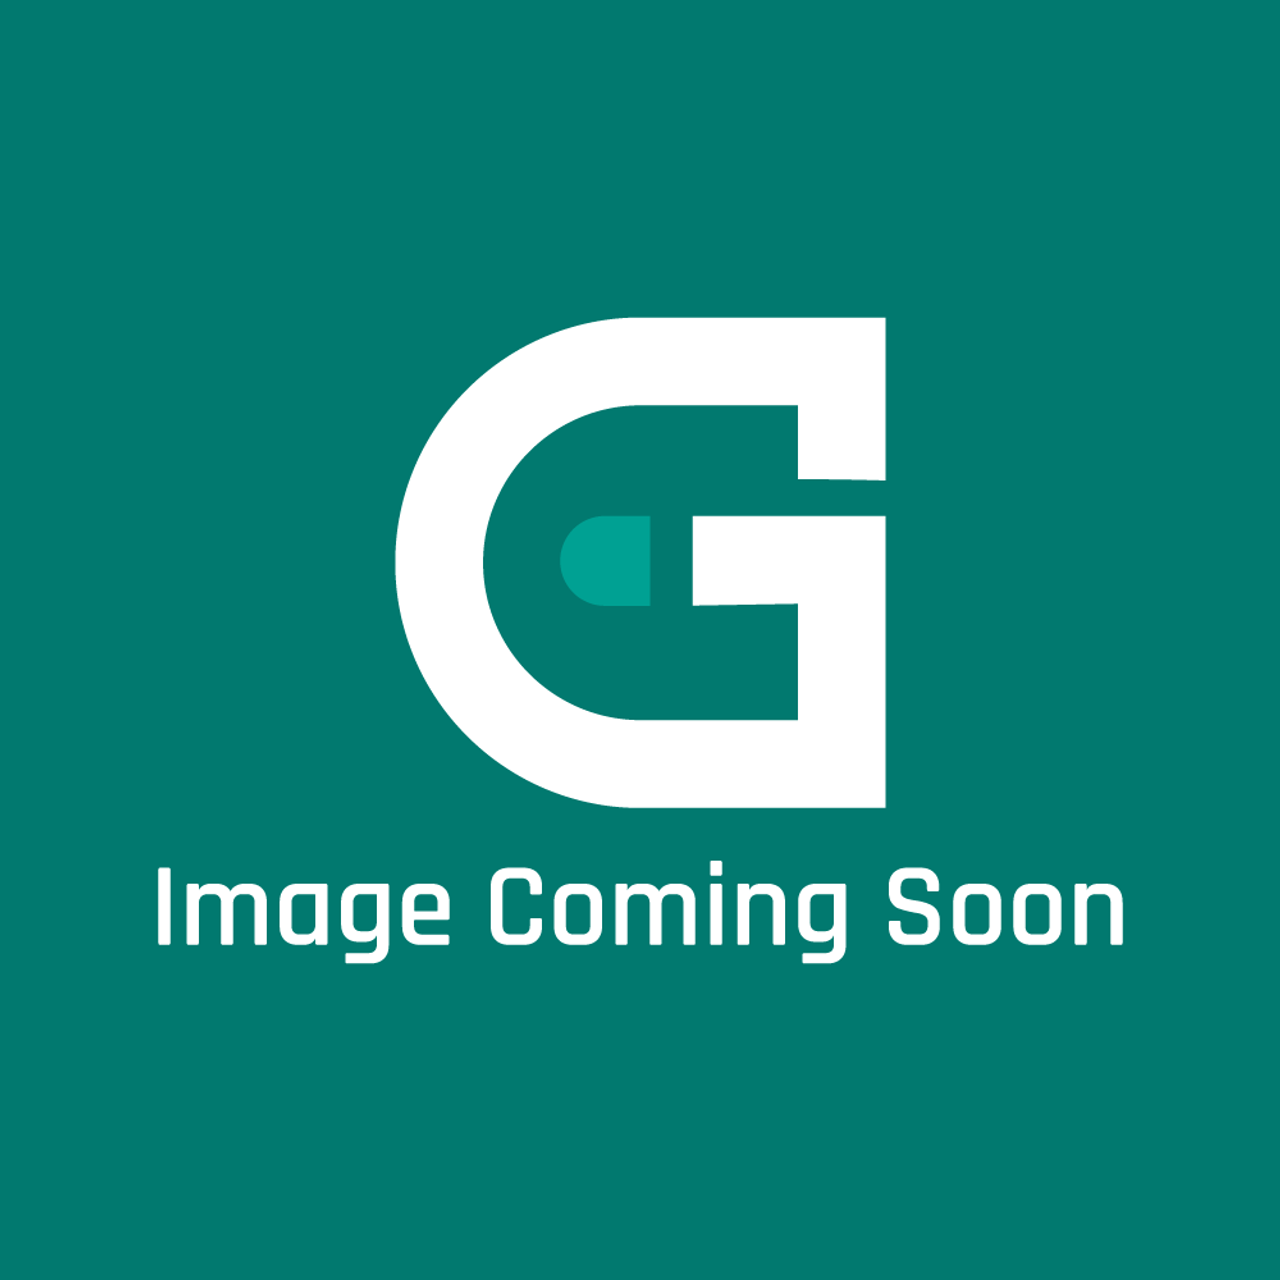 LG 0CF1051V560 - Capacitor,Film,DIP - Image Coming Soon!